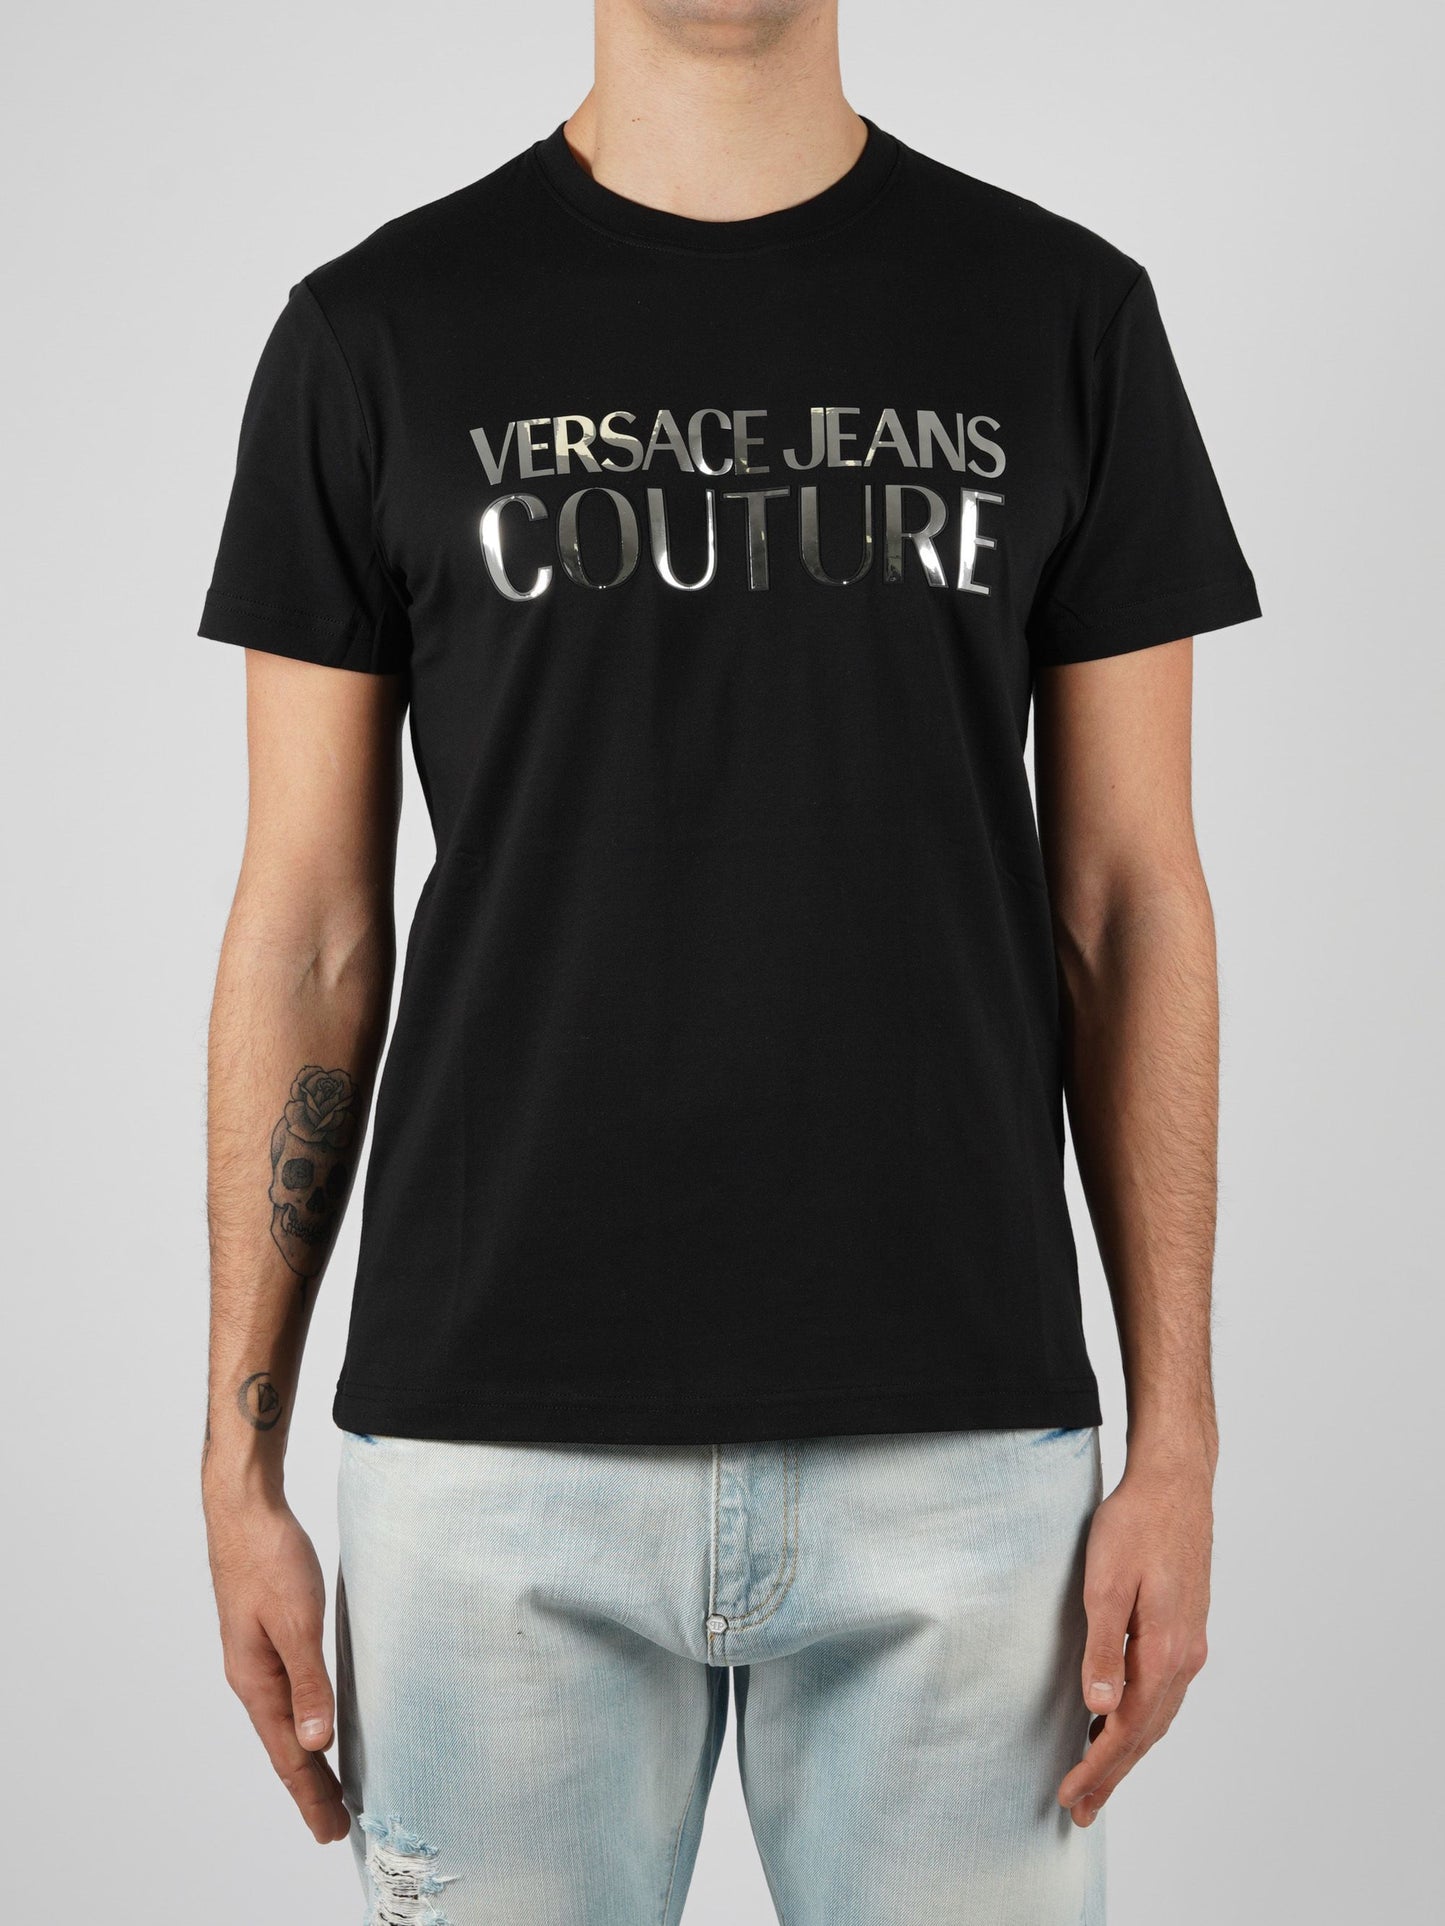 Versace Jeans Couture Men's Black Silver Logo Short Sleeve T-Shirt